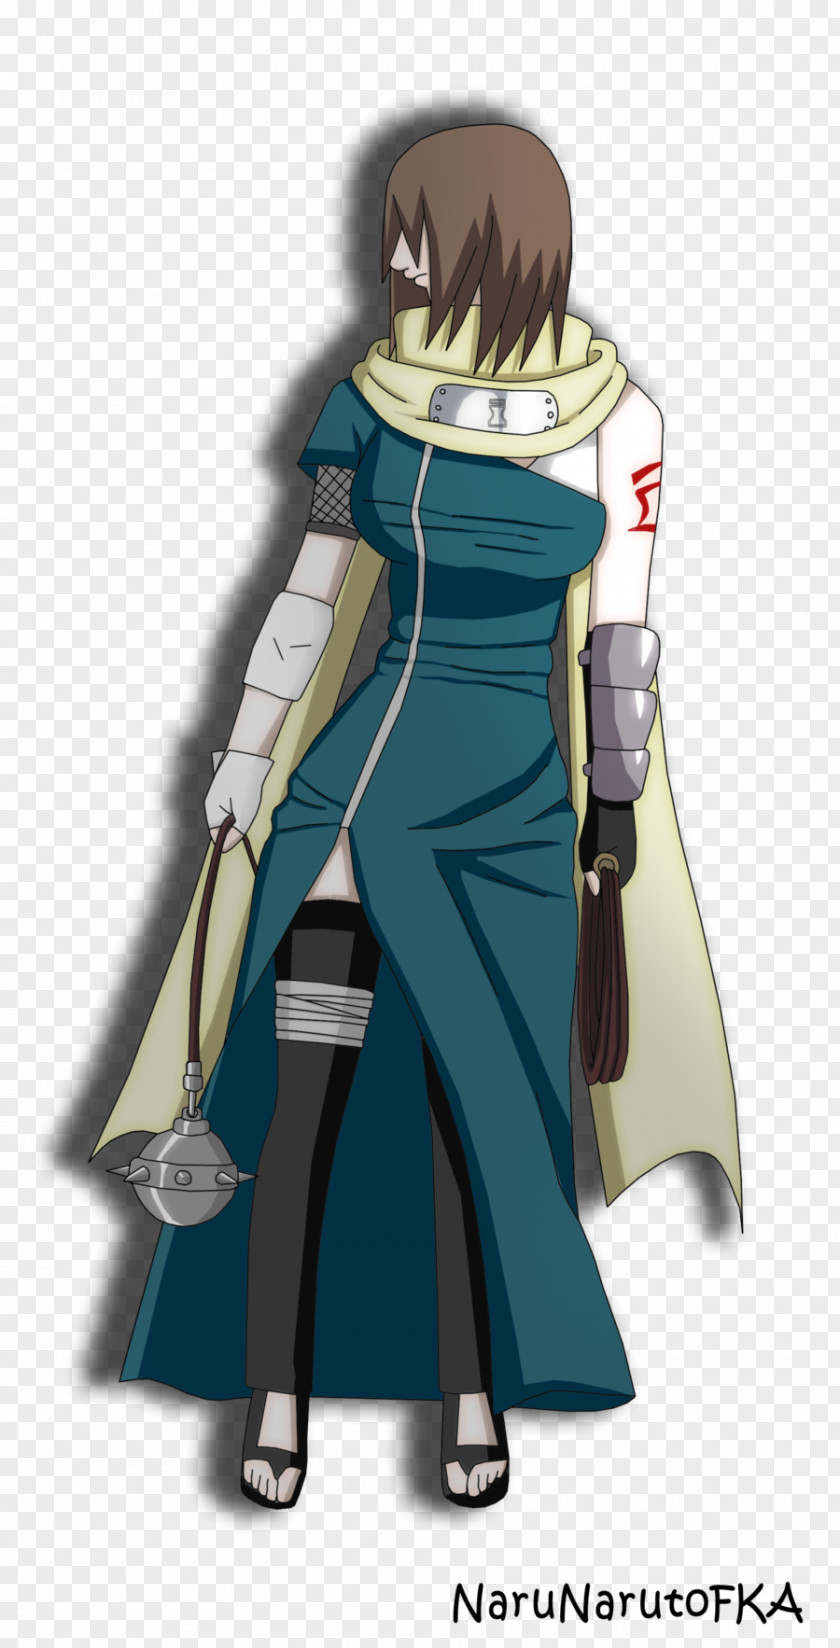 Naruto Gaara Neji Hyuga Costume Character PNG